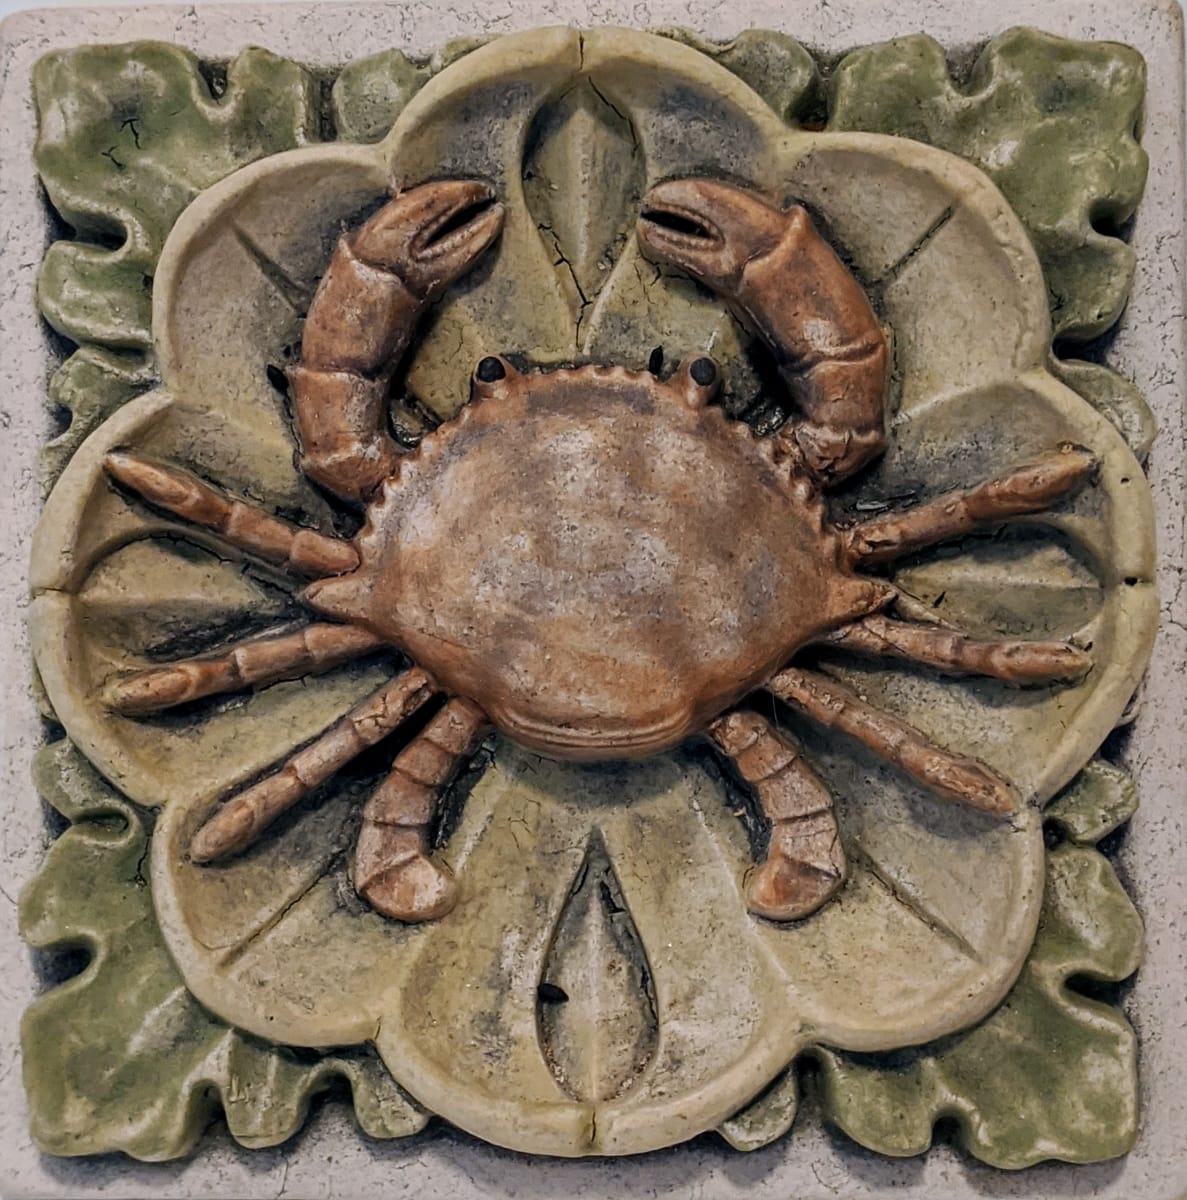 Brown Crab* by David Ellison 